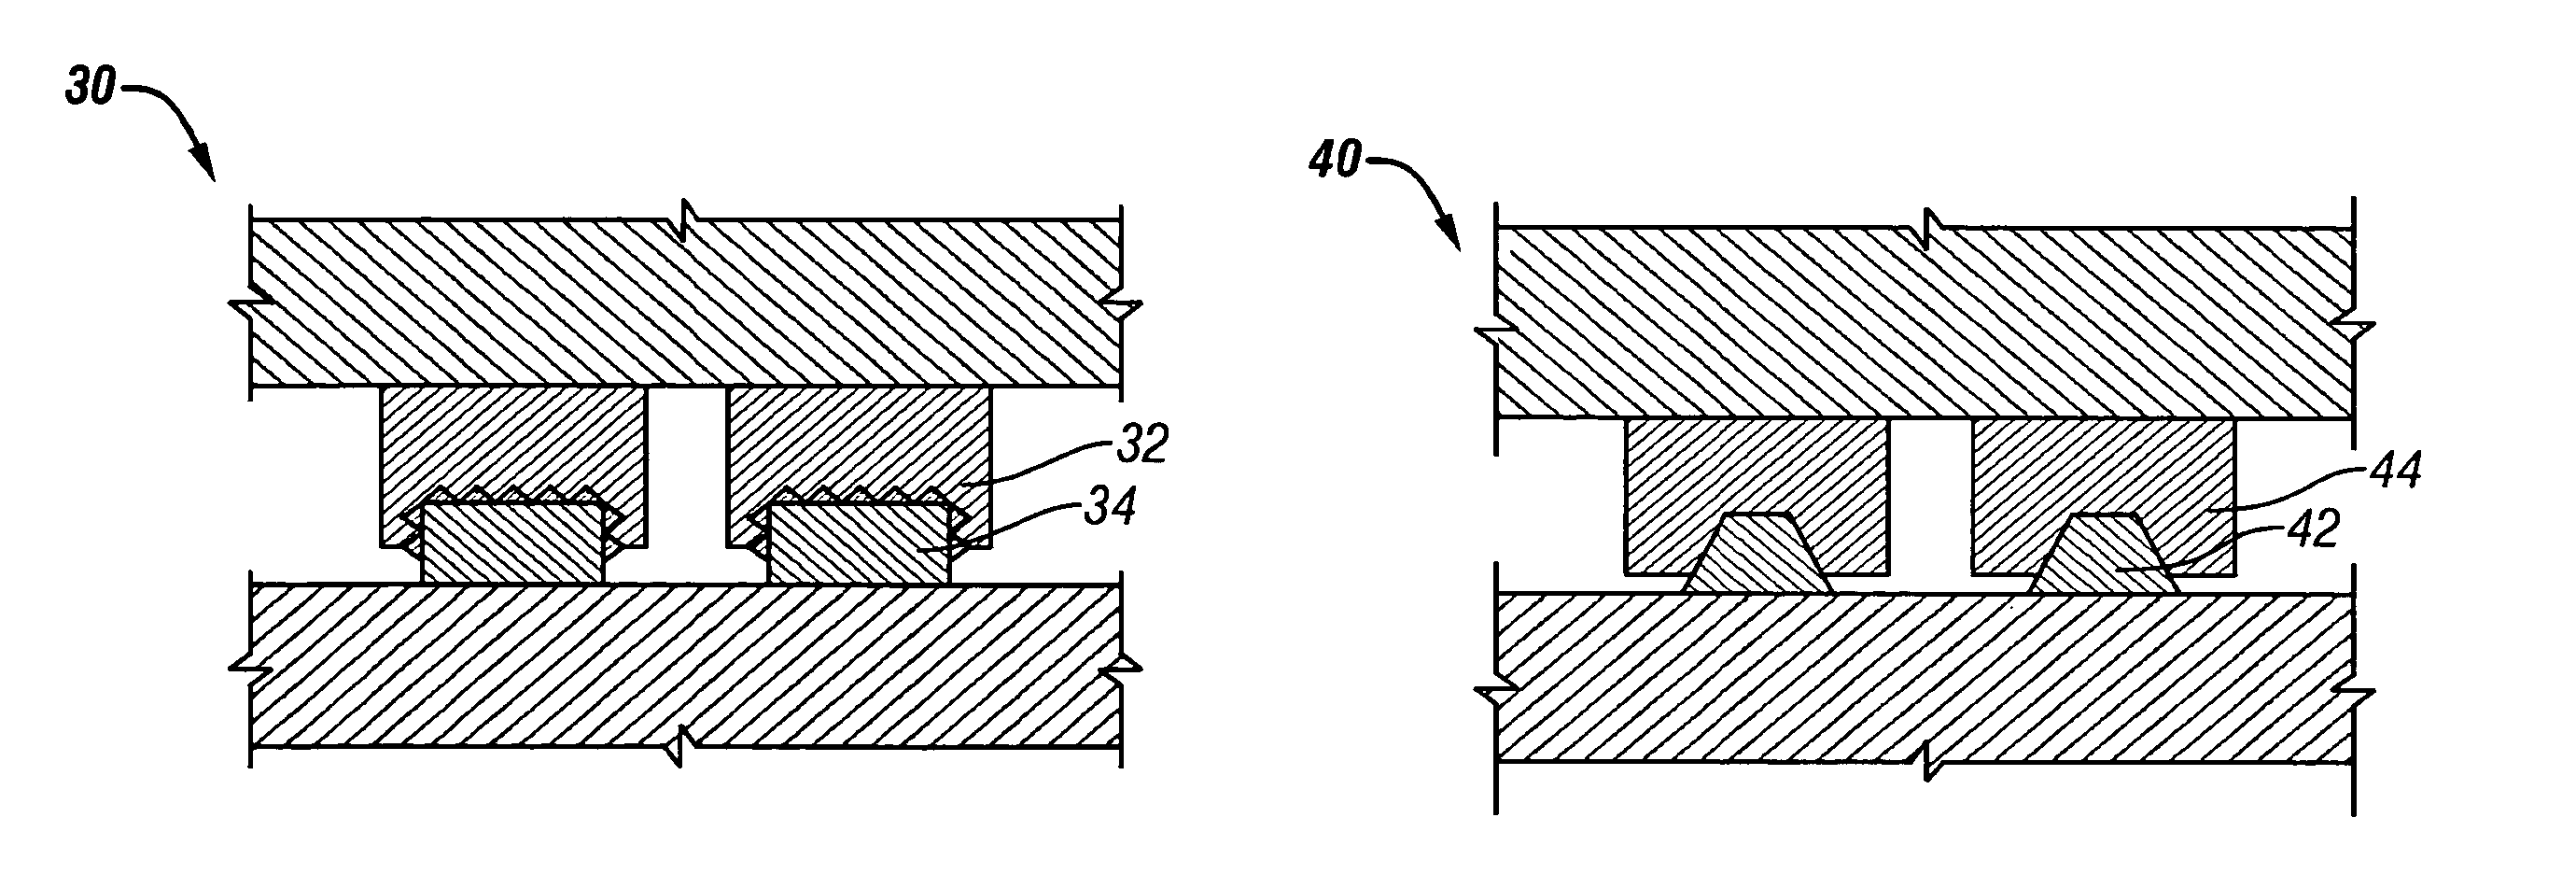 Flip chip interconnection structure